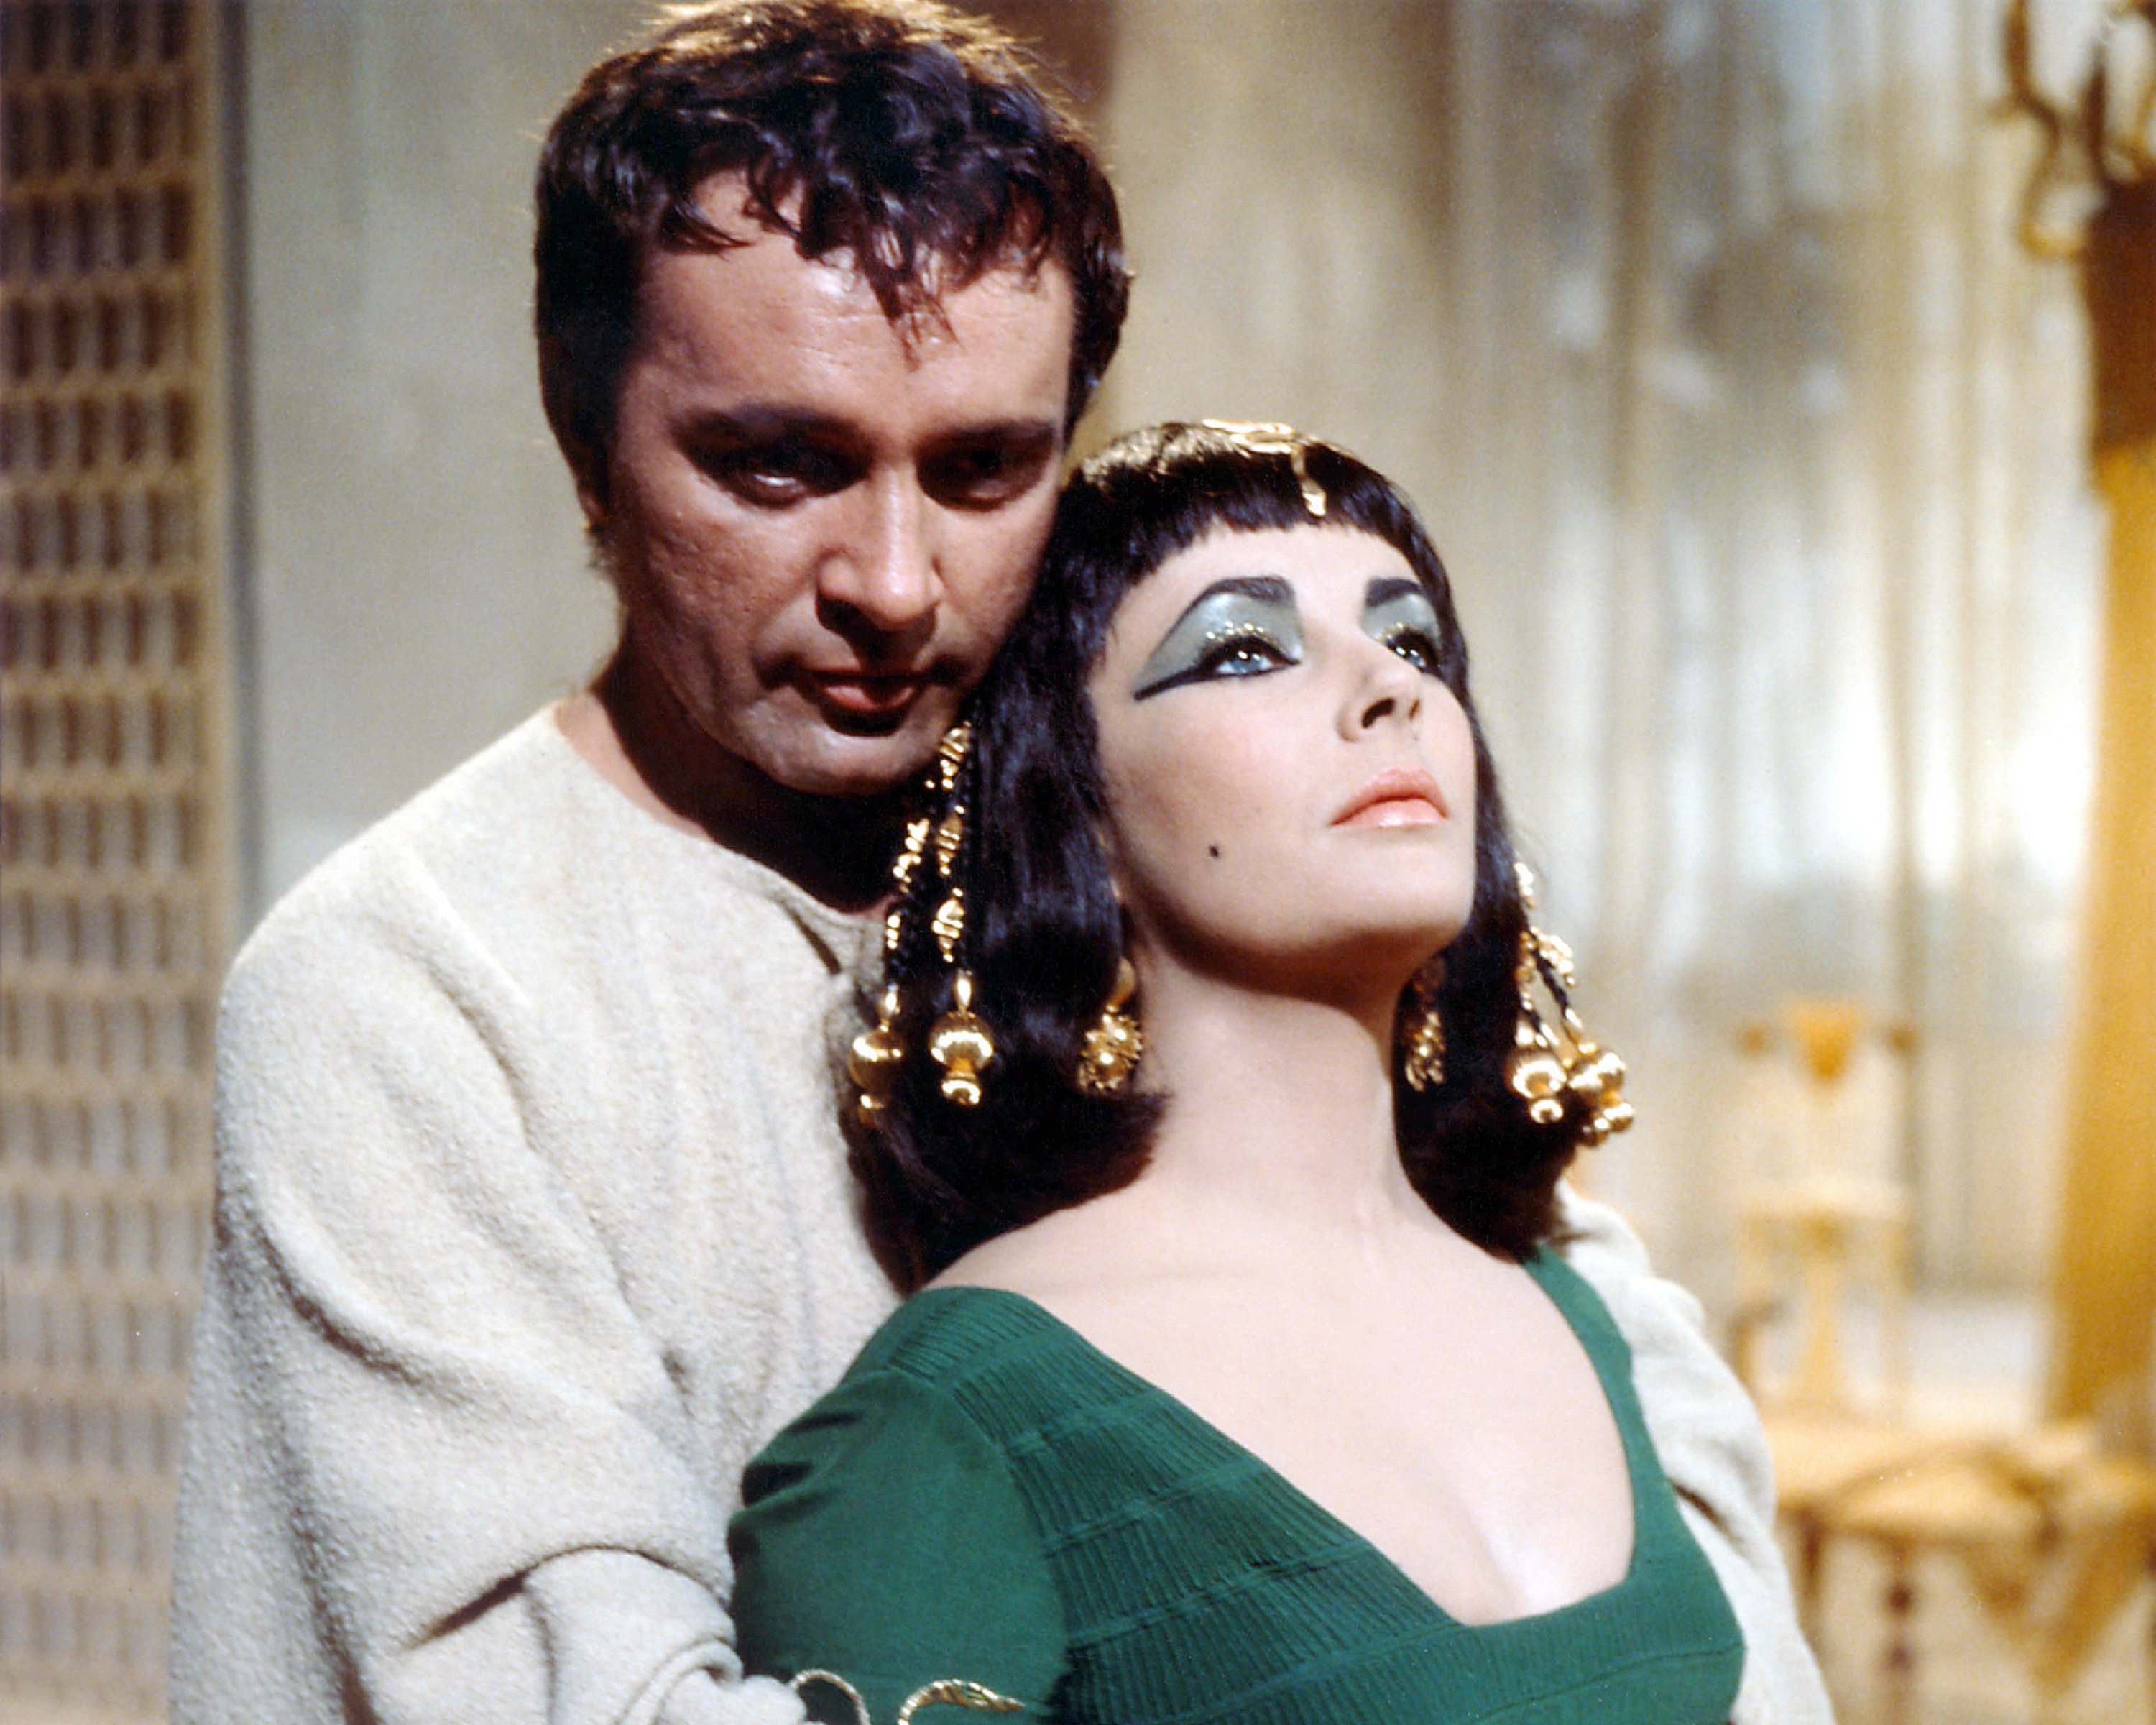 Richard Burton hugging Elizabeth Taylor is promo pic for Cleopatra